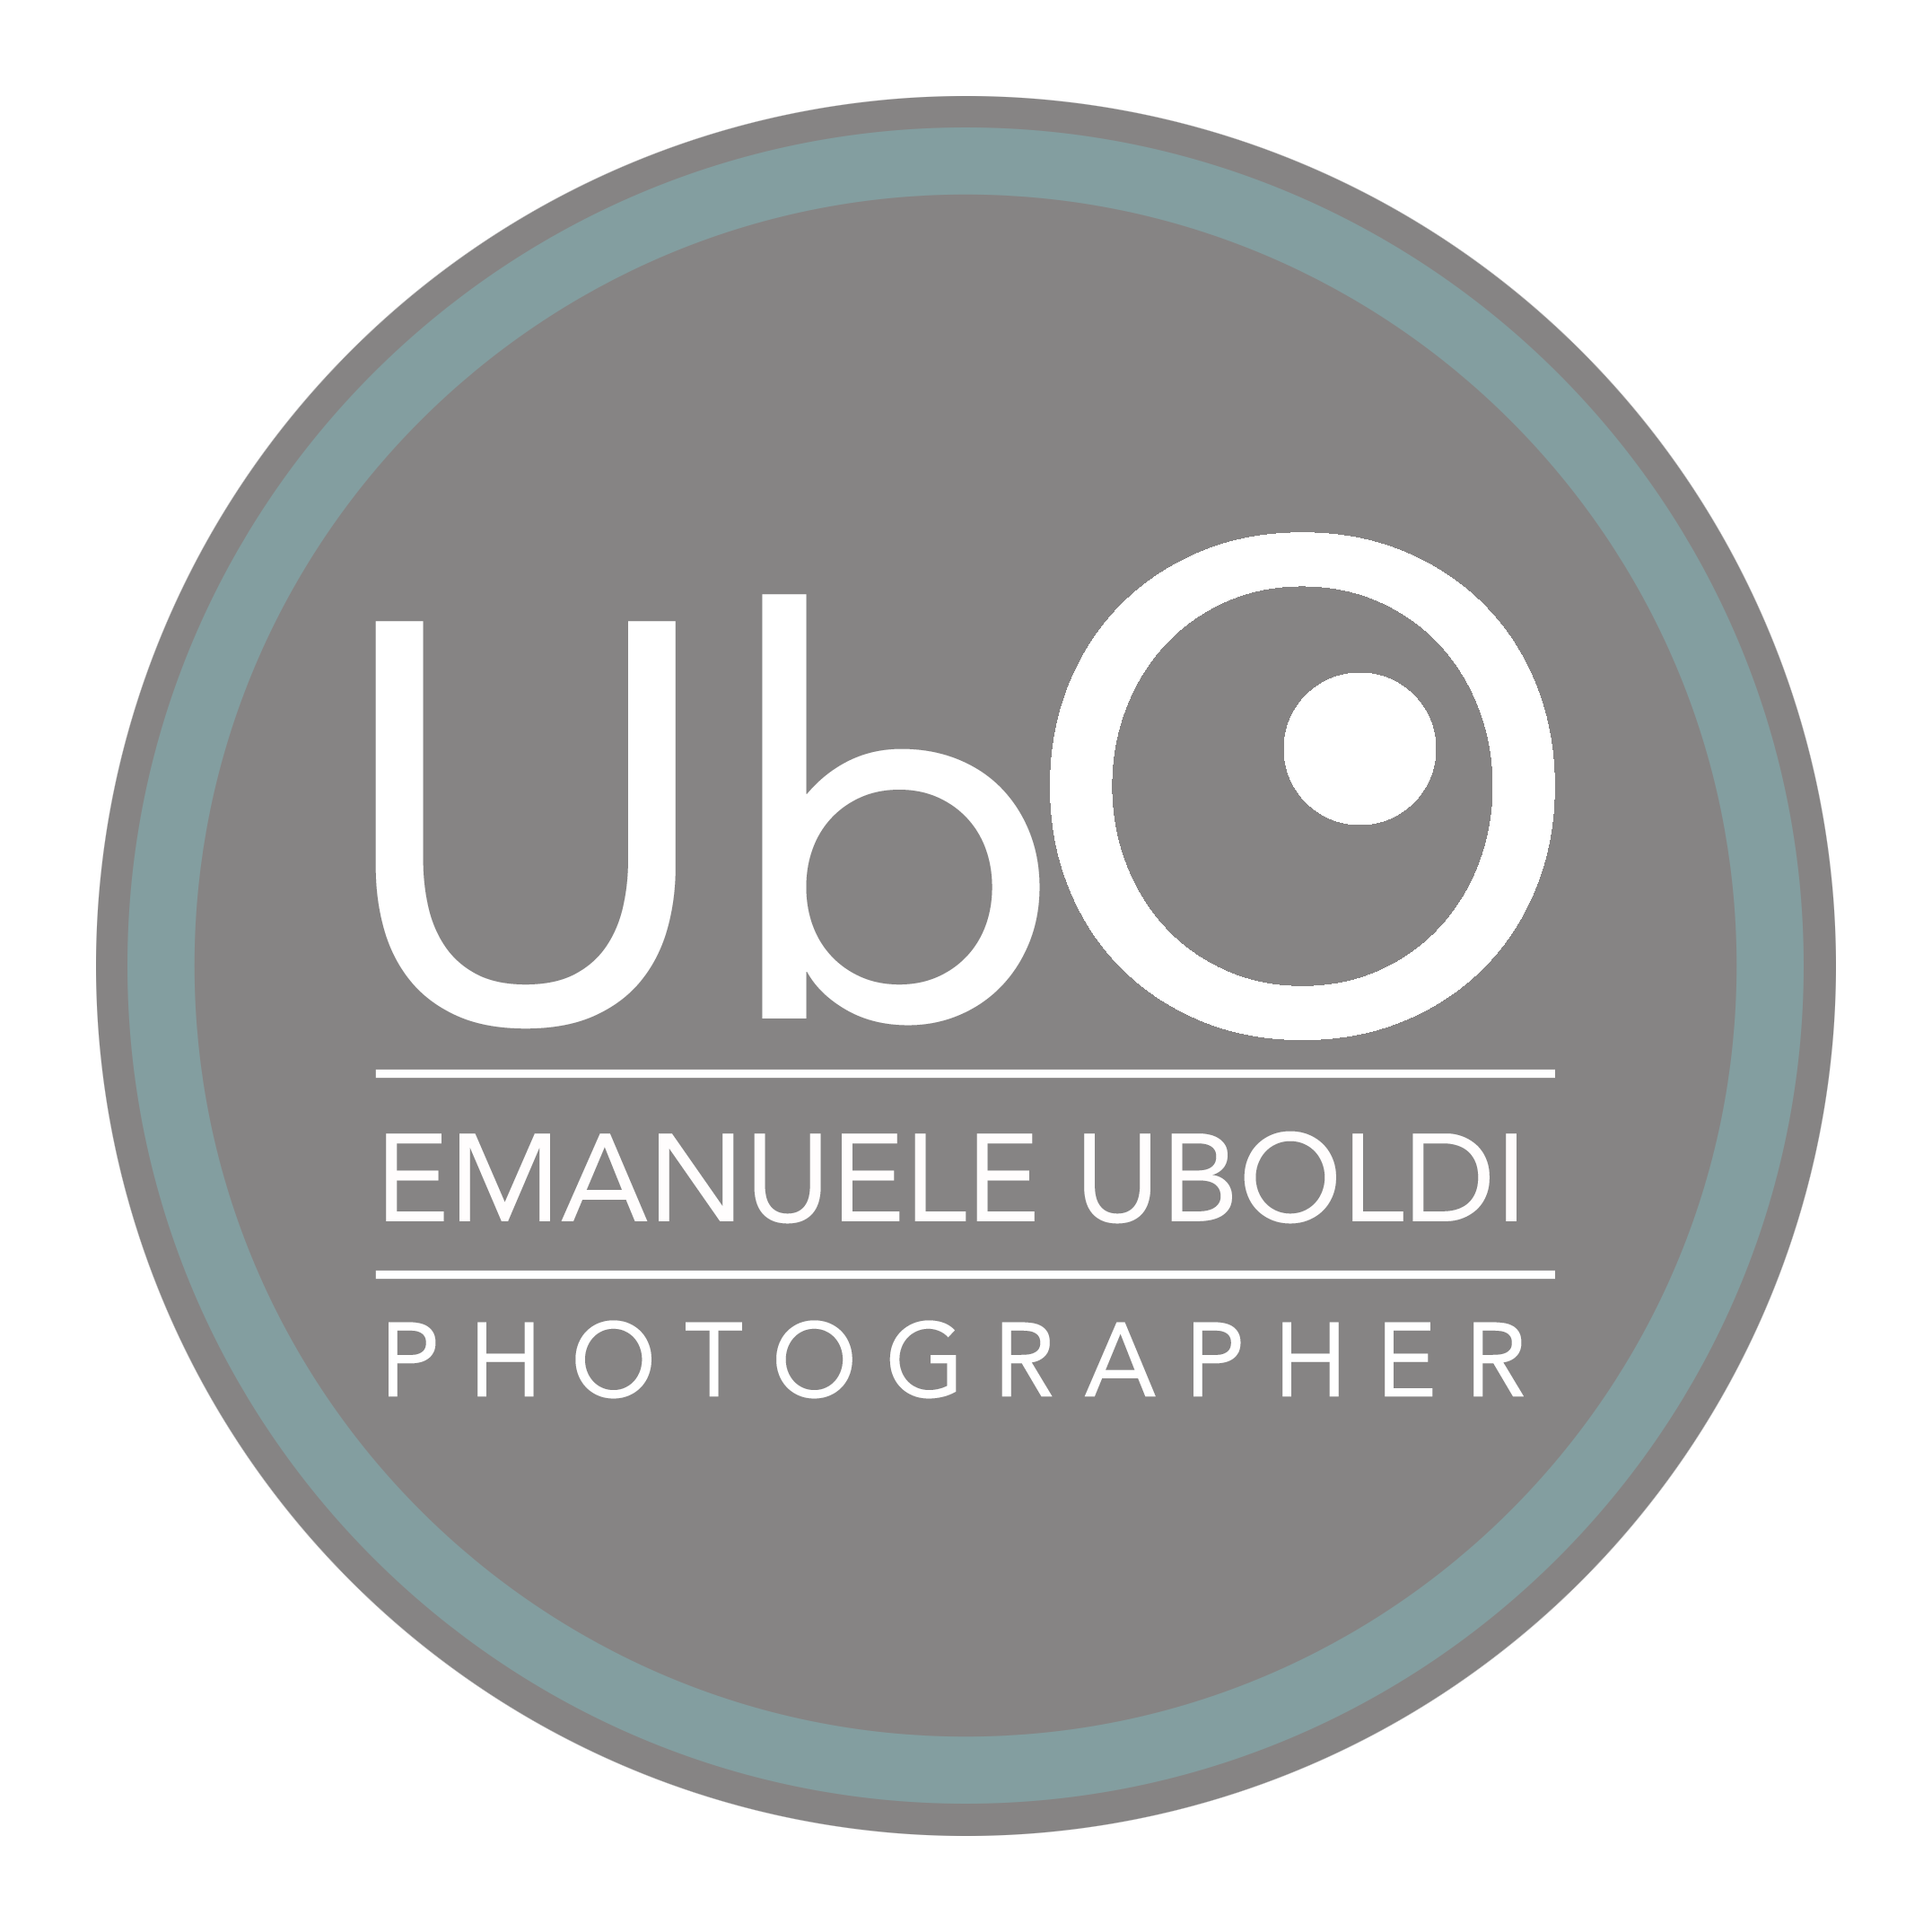 Love  - Emanuele Uboldi Studio Ubo Photographer